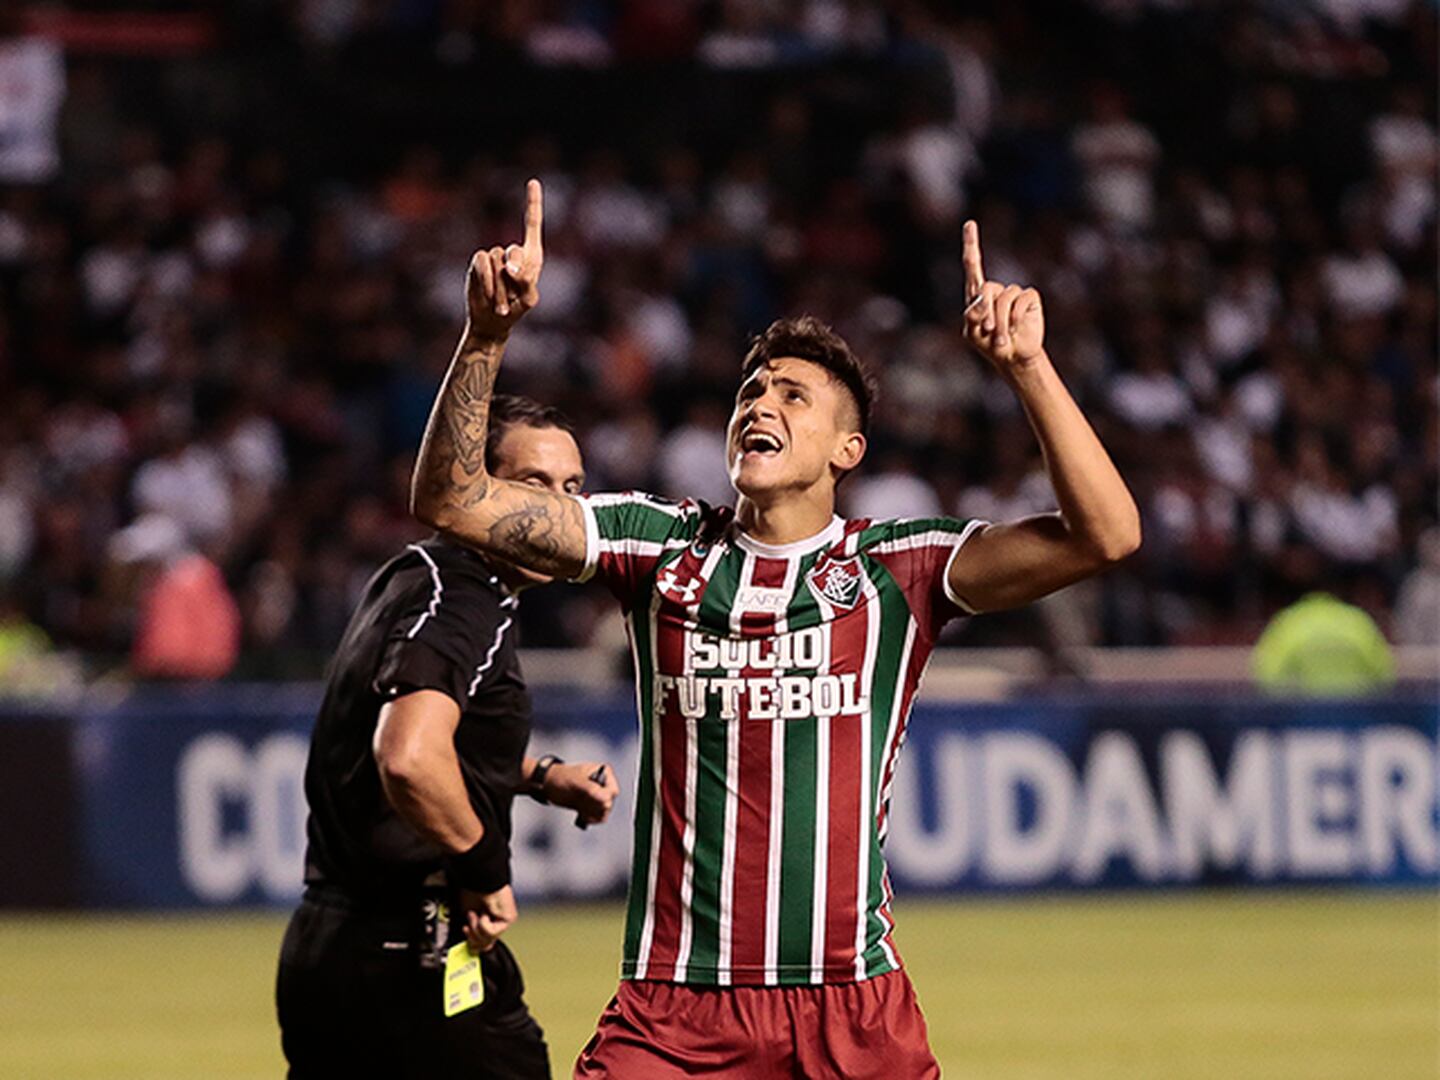 Con un gol sobre el final, Fluminense clasificó a cuartos de final de la Sudamericana